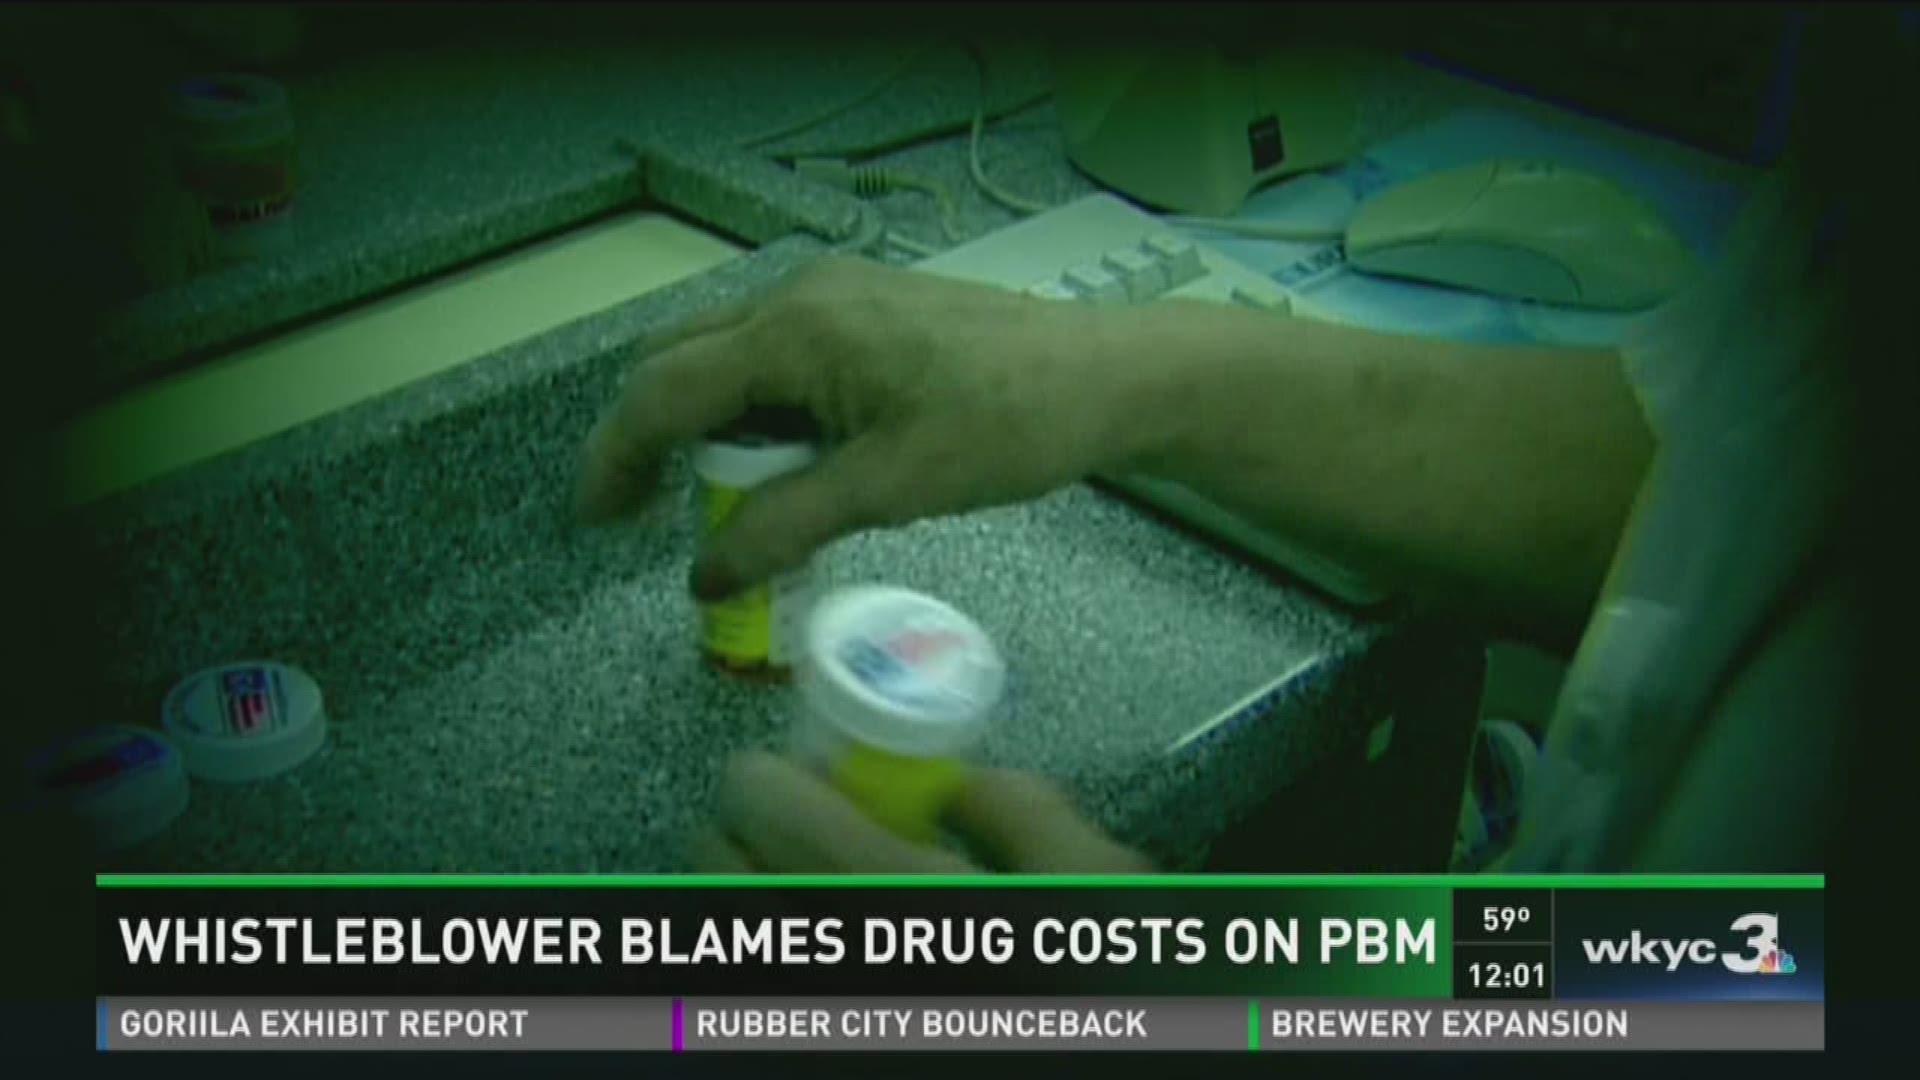 Whistleblower blames drug costs on PBM